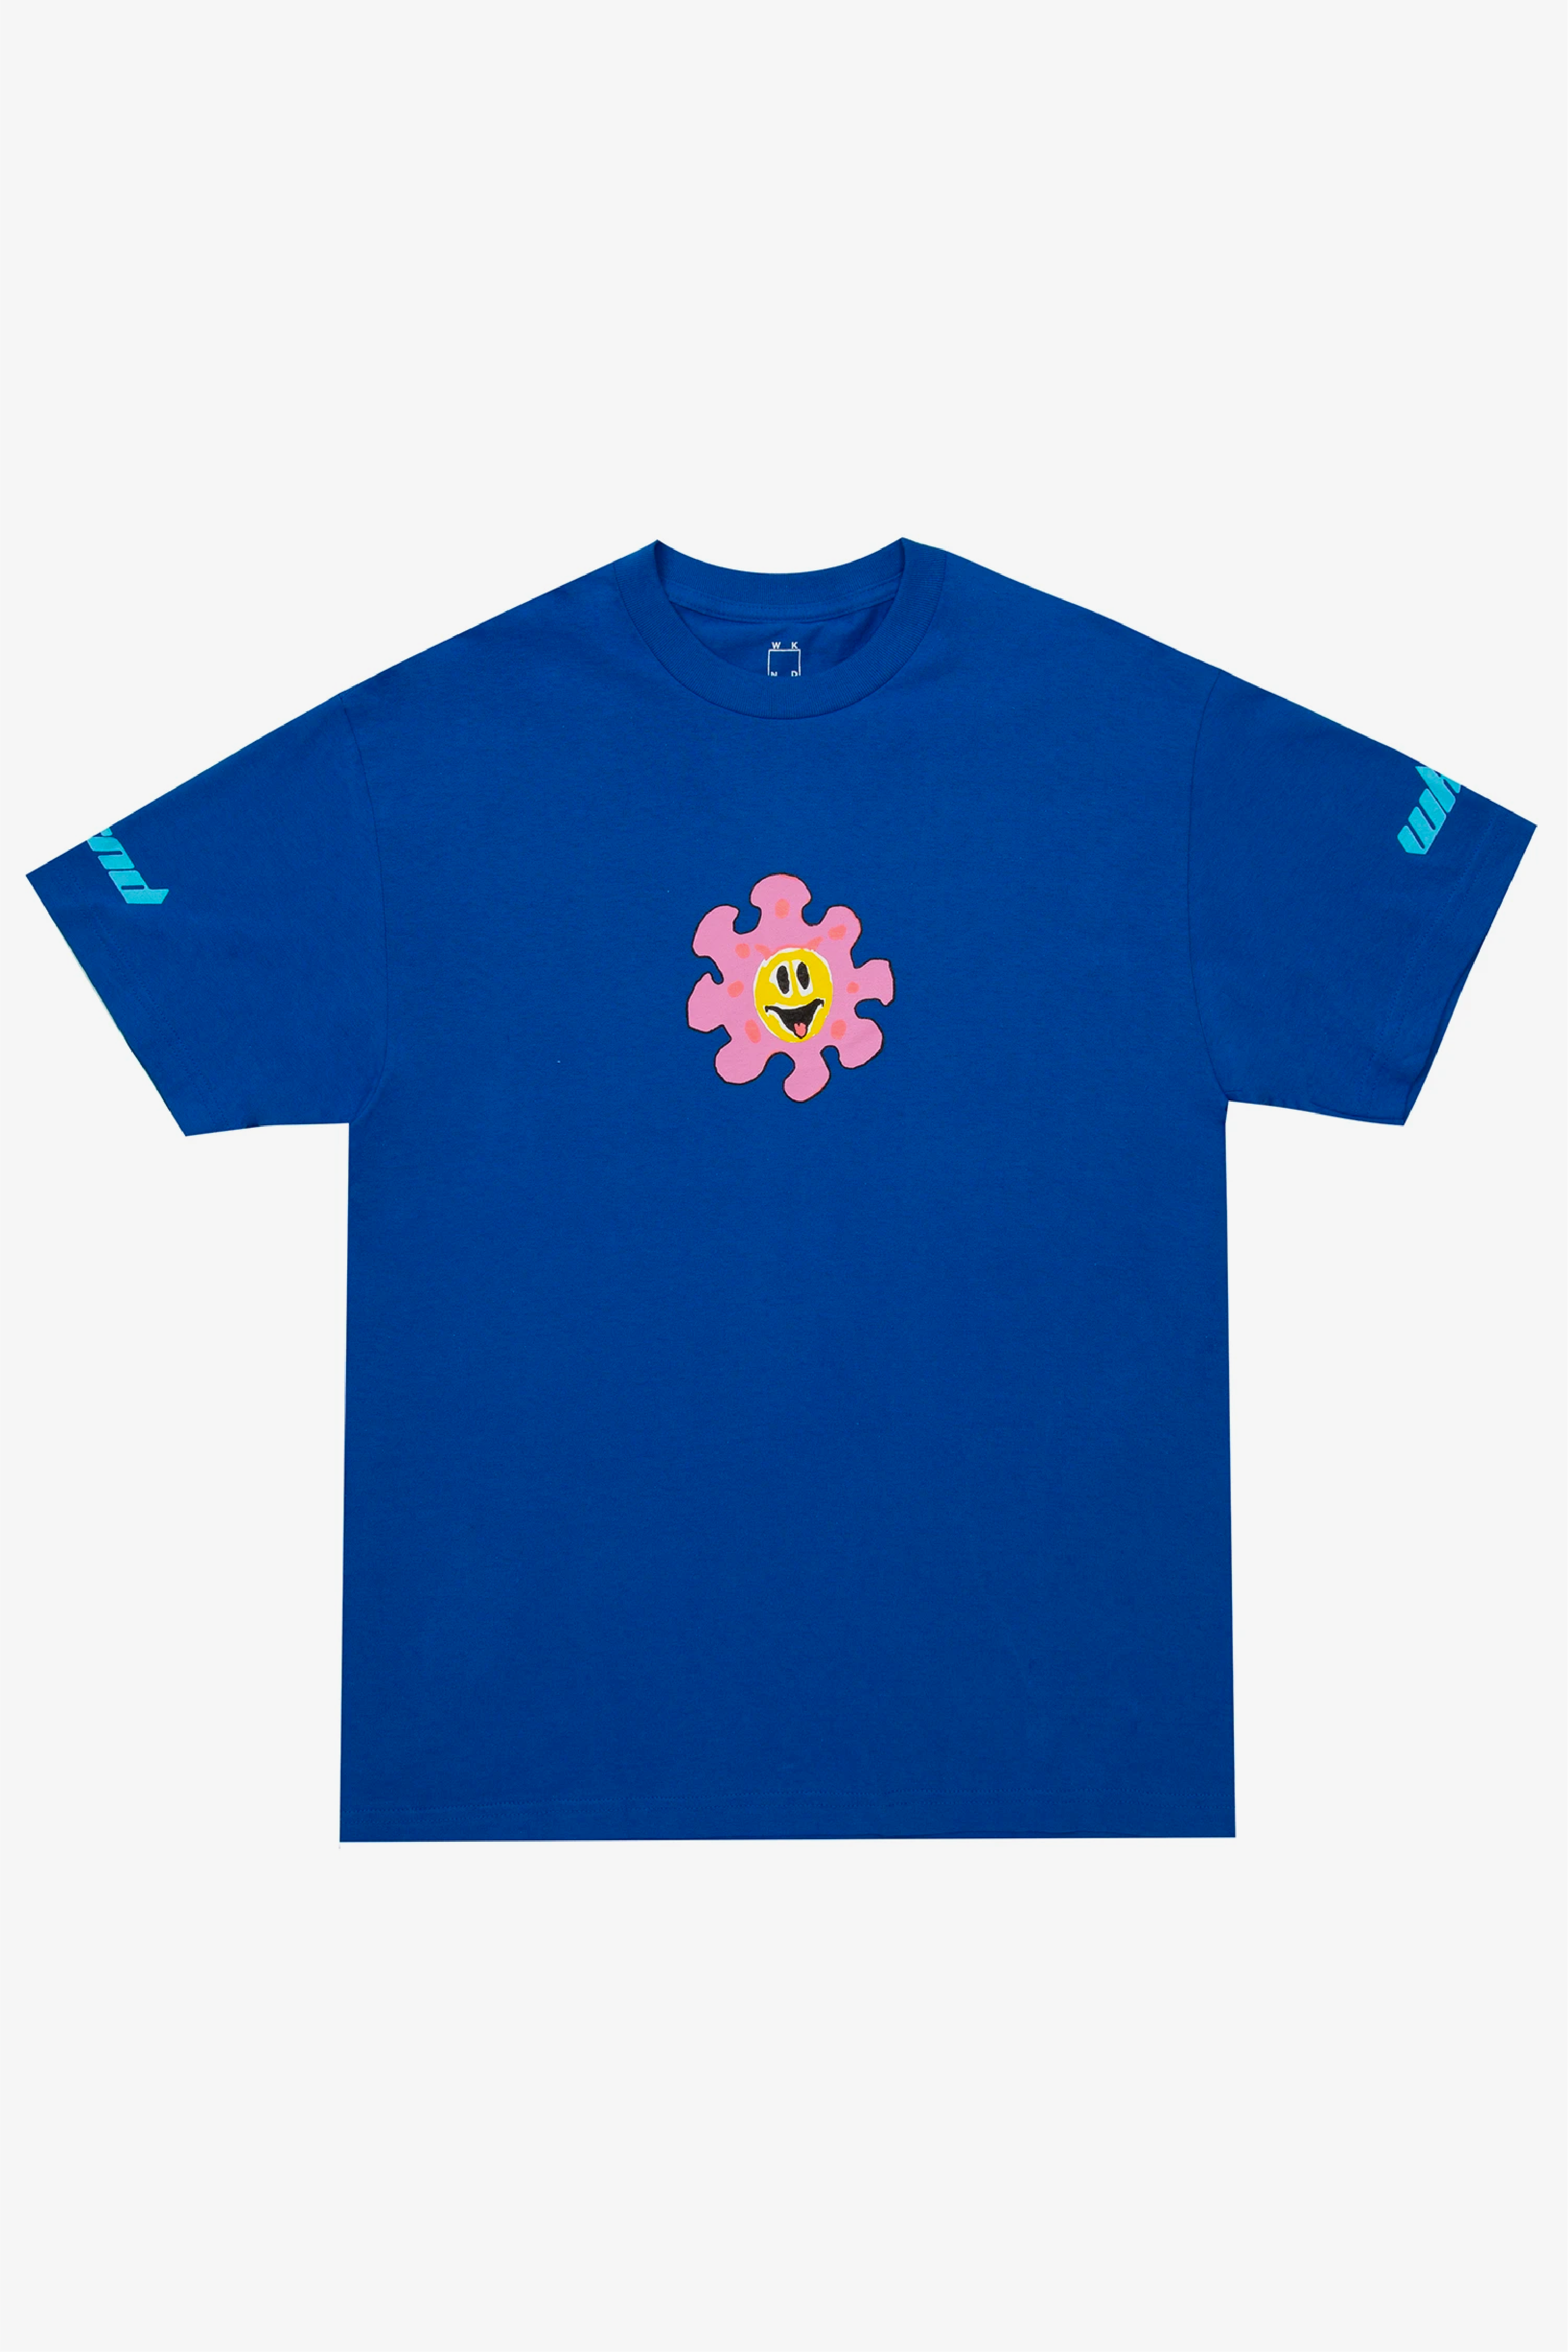 Selectshop FRAME - WKND Flower Tee T-Shirts Dubai